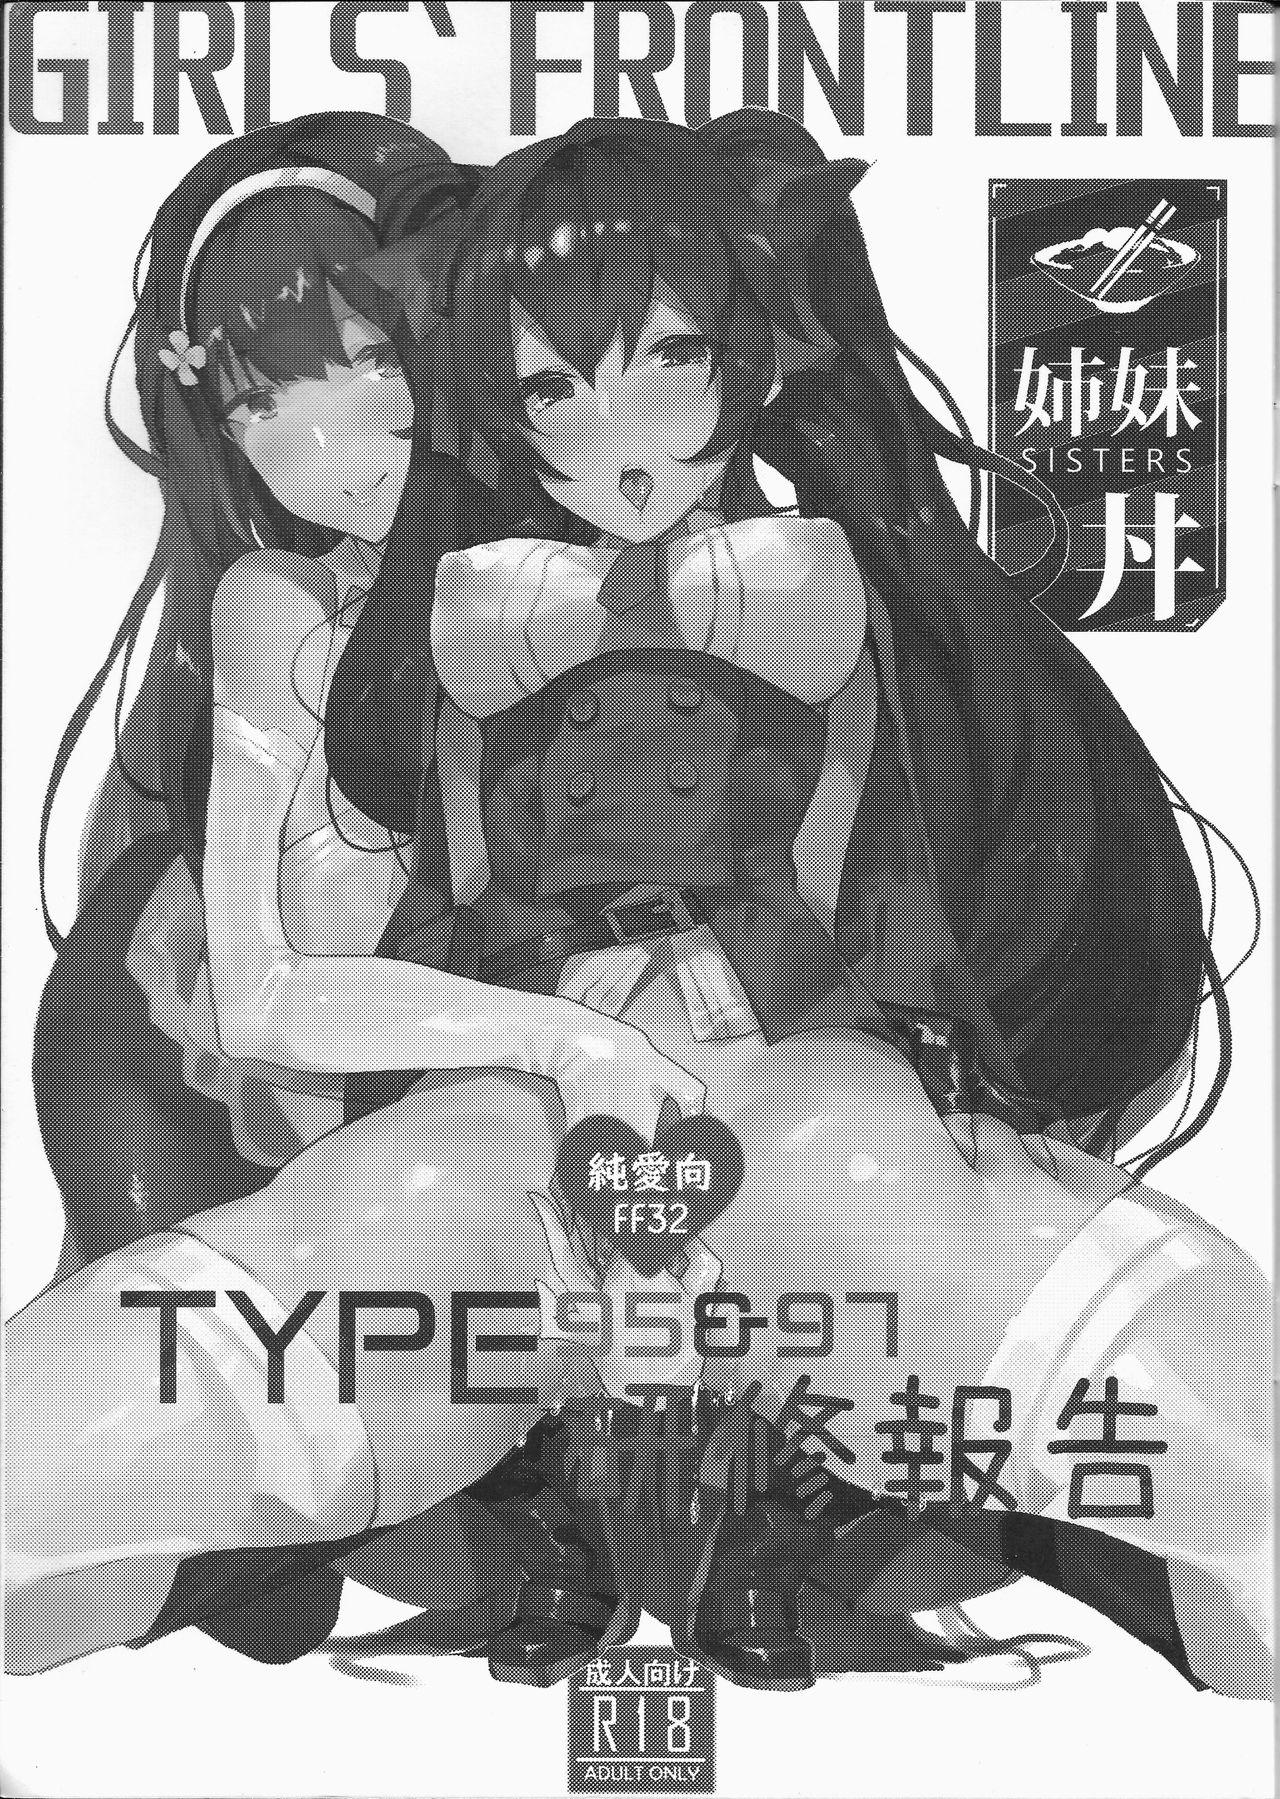 [FF32]  [TMSB Danyakuko (Tsukimiya Tsutomu)] TYPE95&97研修報告(Girls Frontline) 恐怖蟑螂公個人分享 1